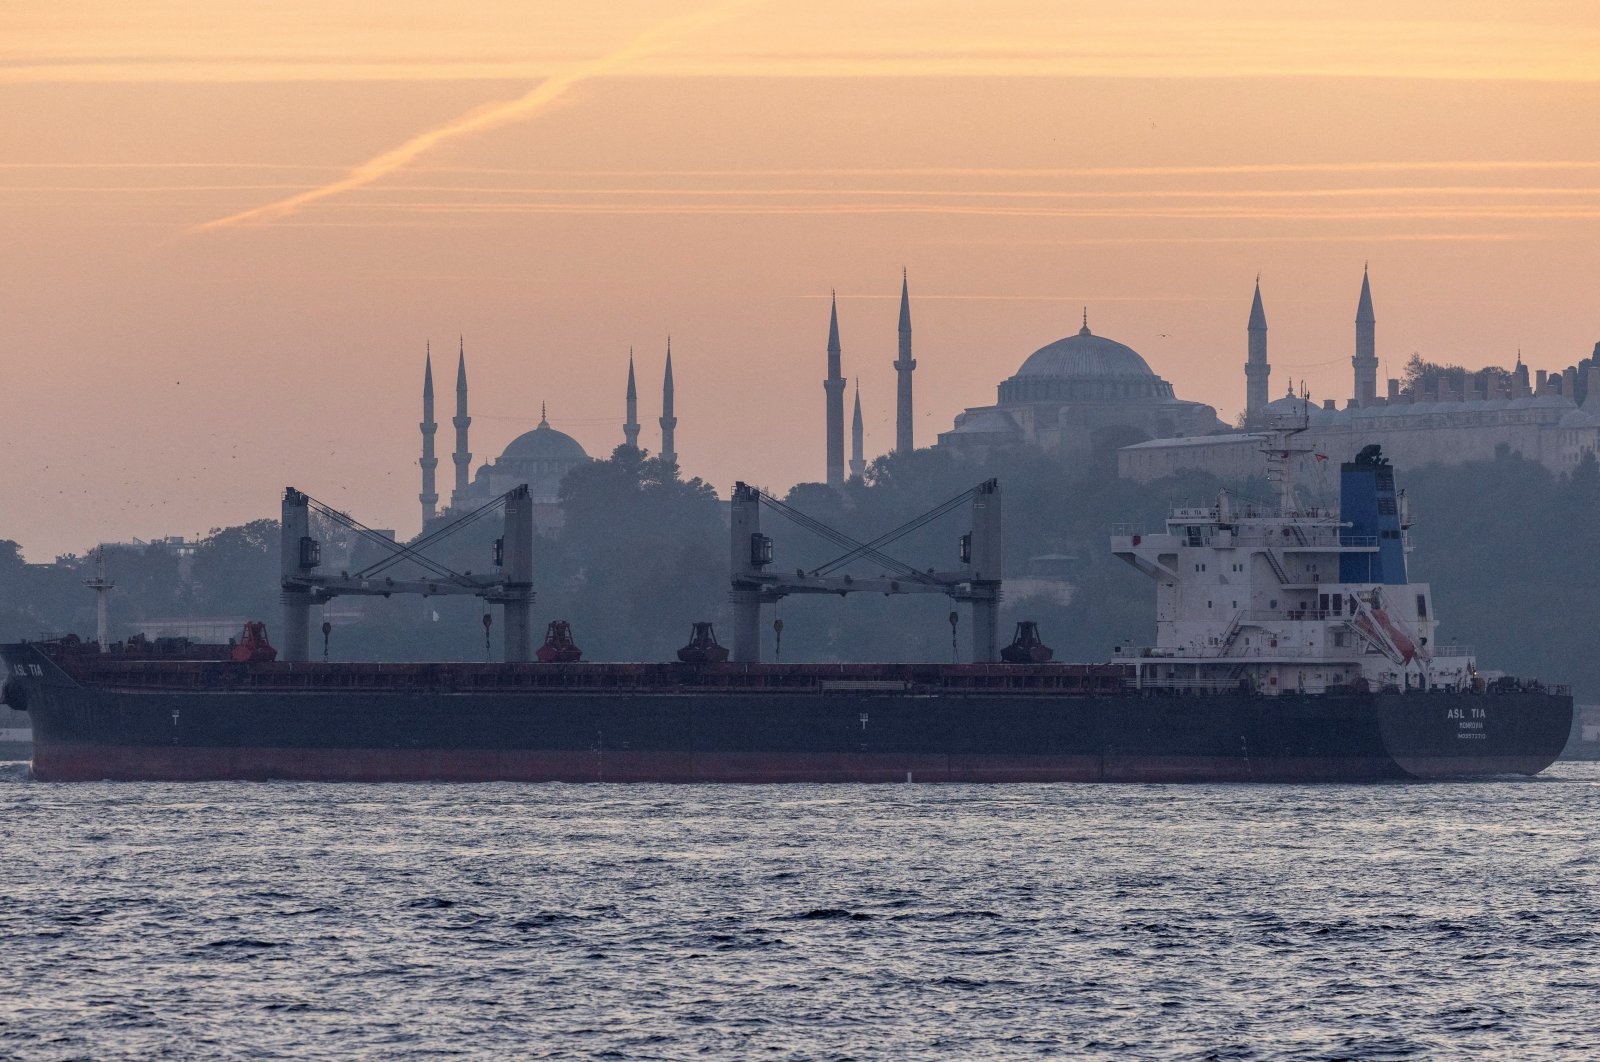 Asl Tia, a cargo vessel carrying Ukrainian grain, transits Bosporus, in Istanbul, Türkiye, Nov. 2, 2022. (Reuters File Photo)